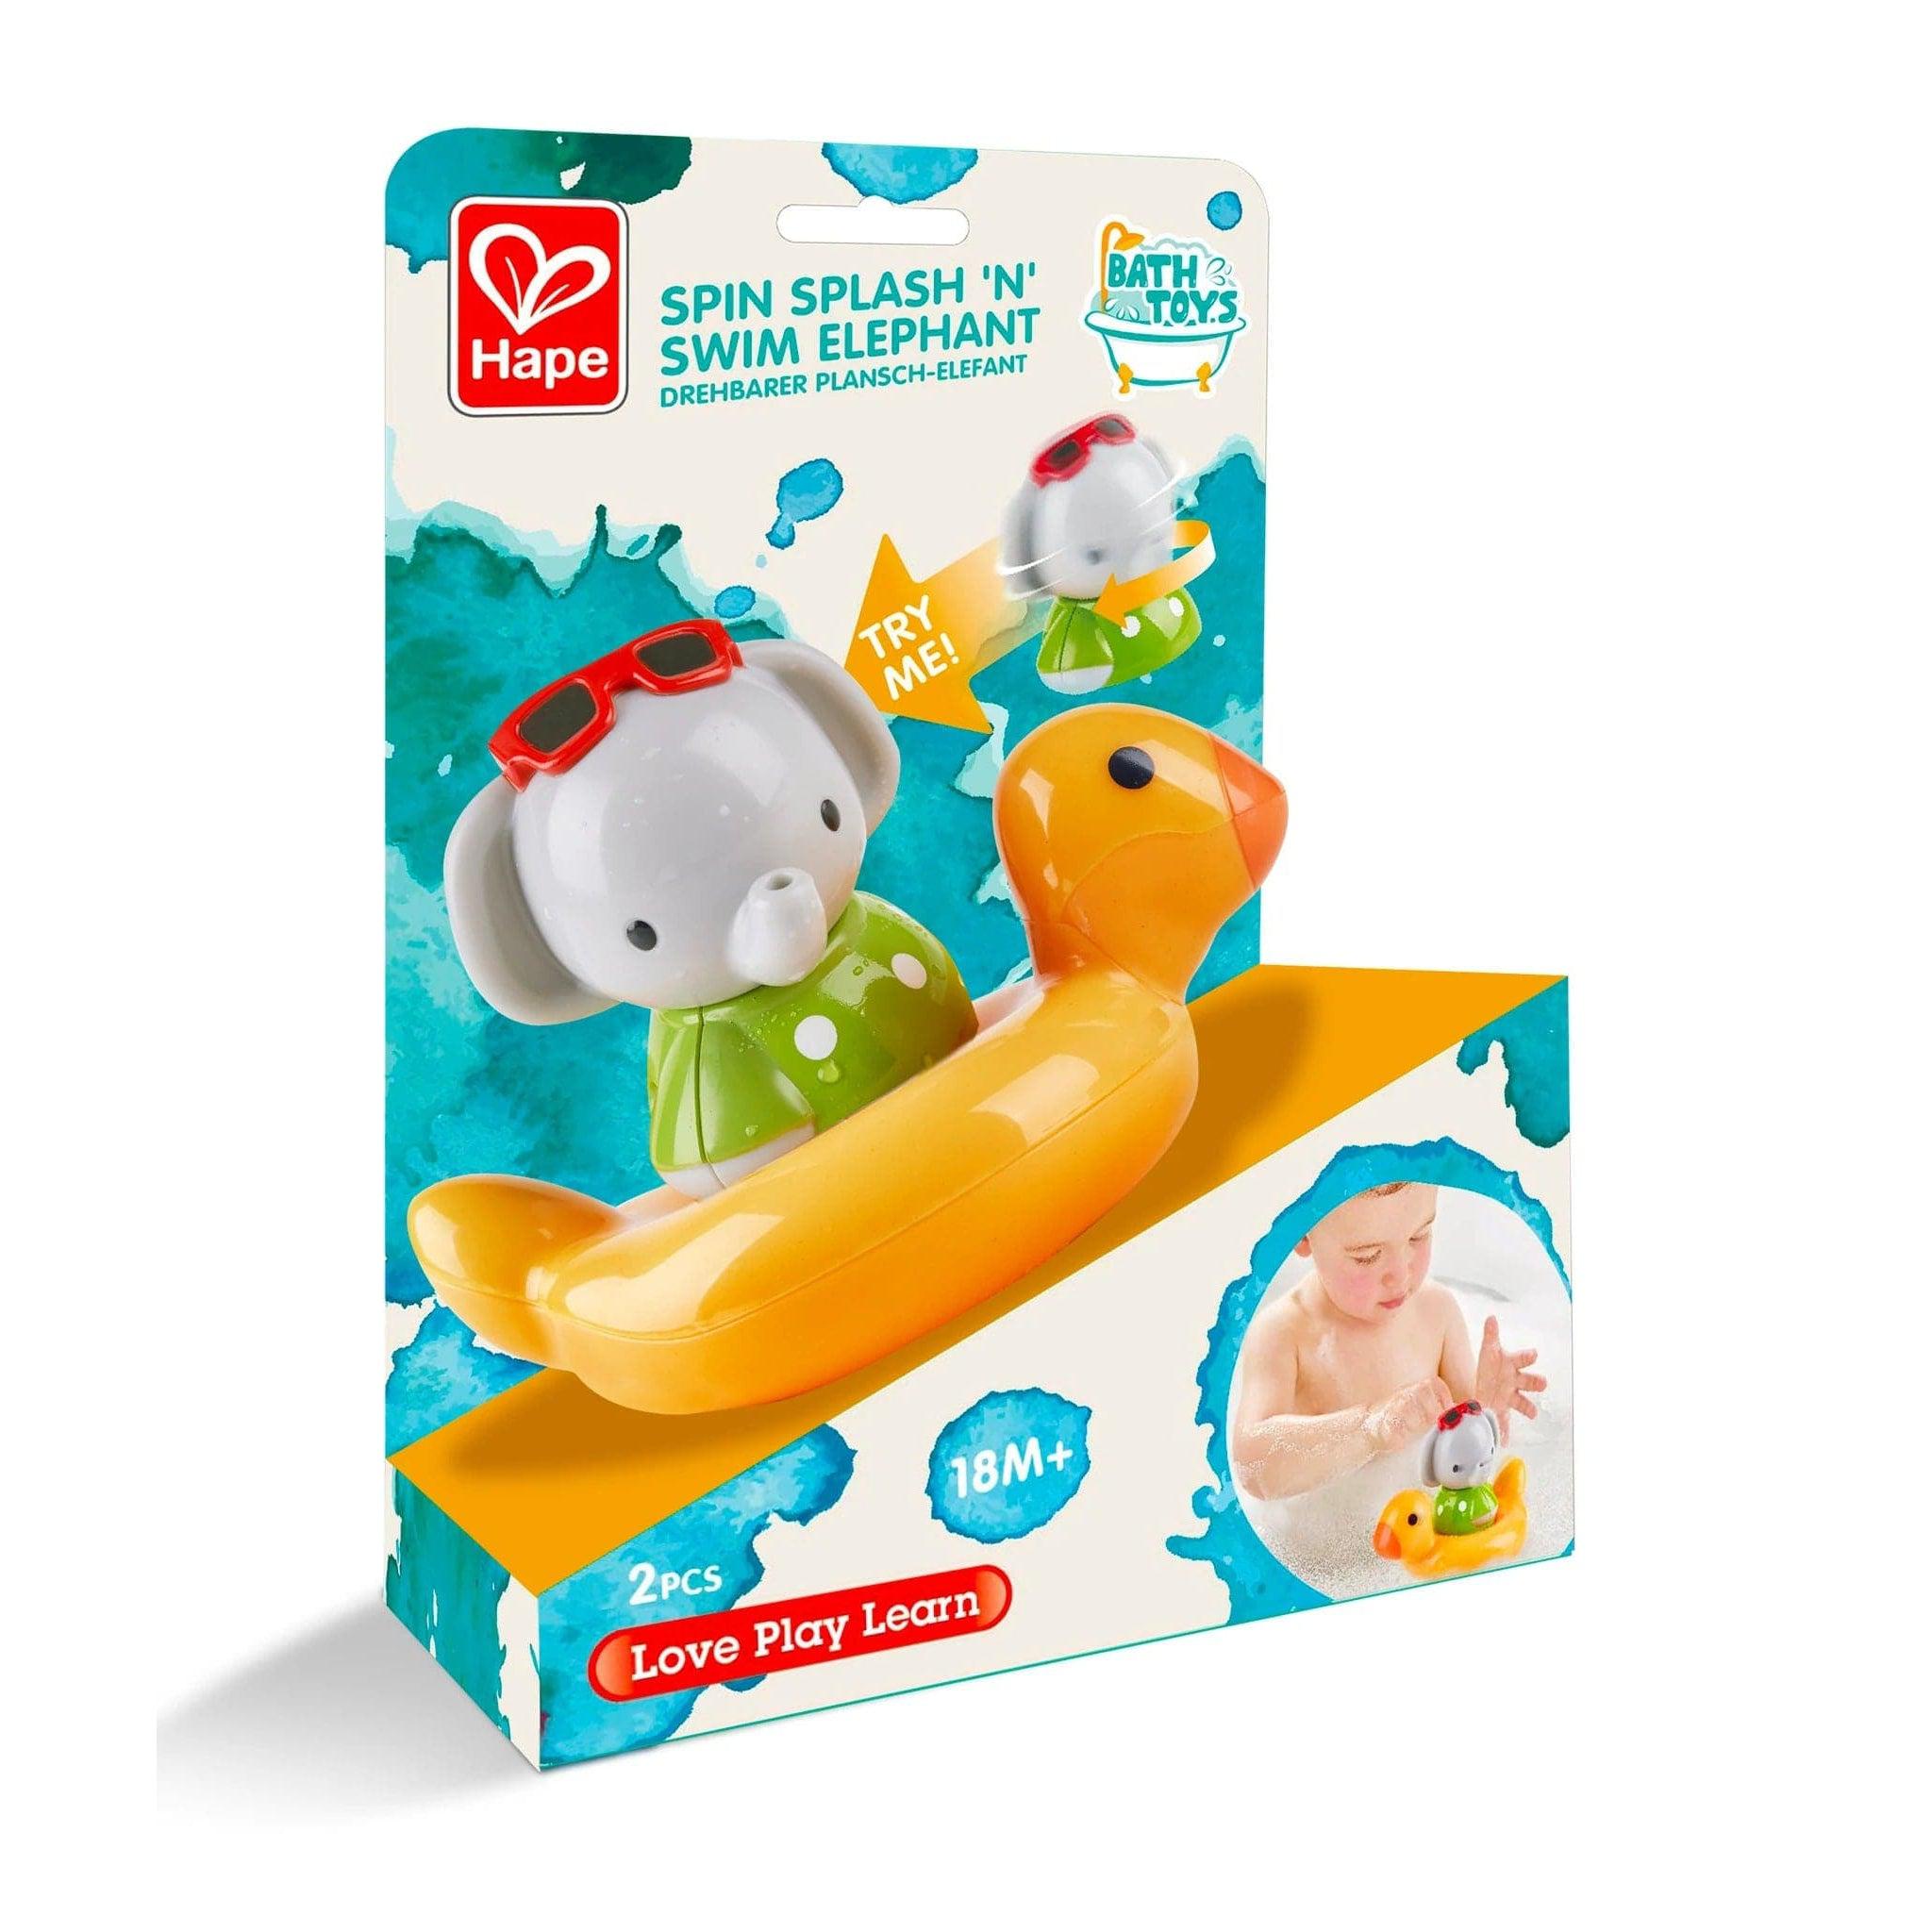 Hape-Spin Splash 'n' Swim Elephant-E0222-Legacy Toys